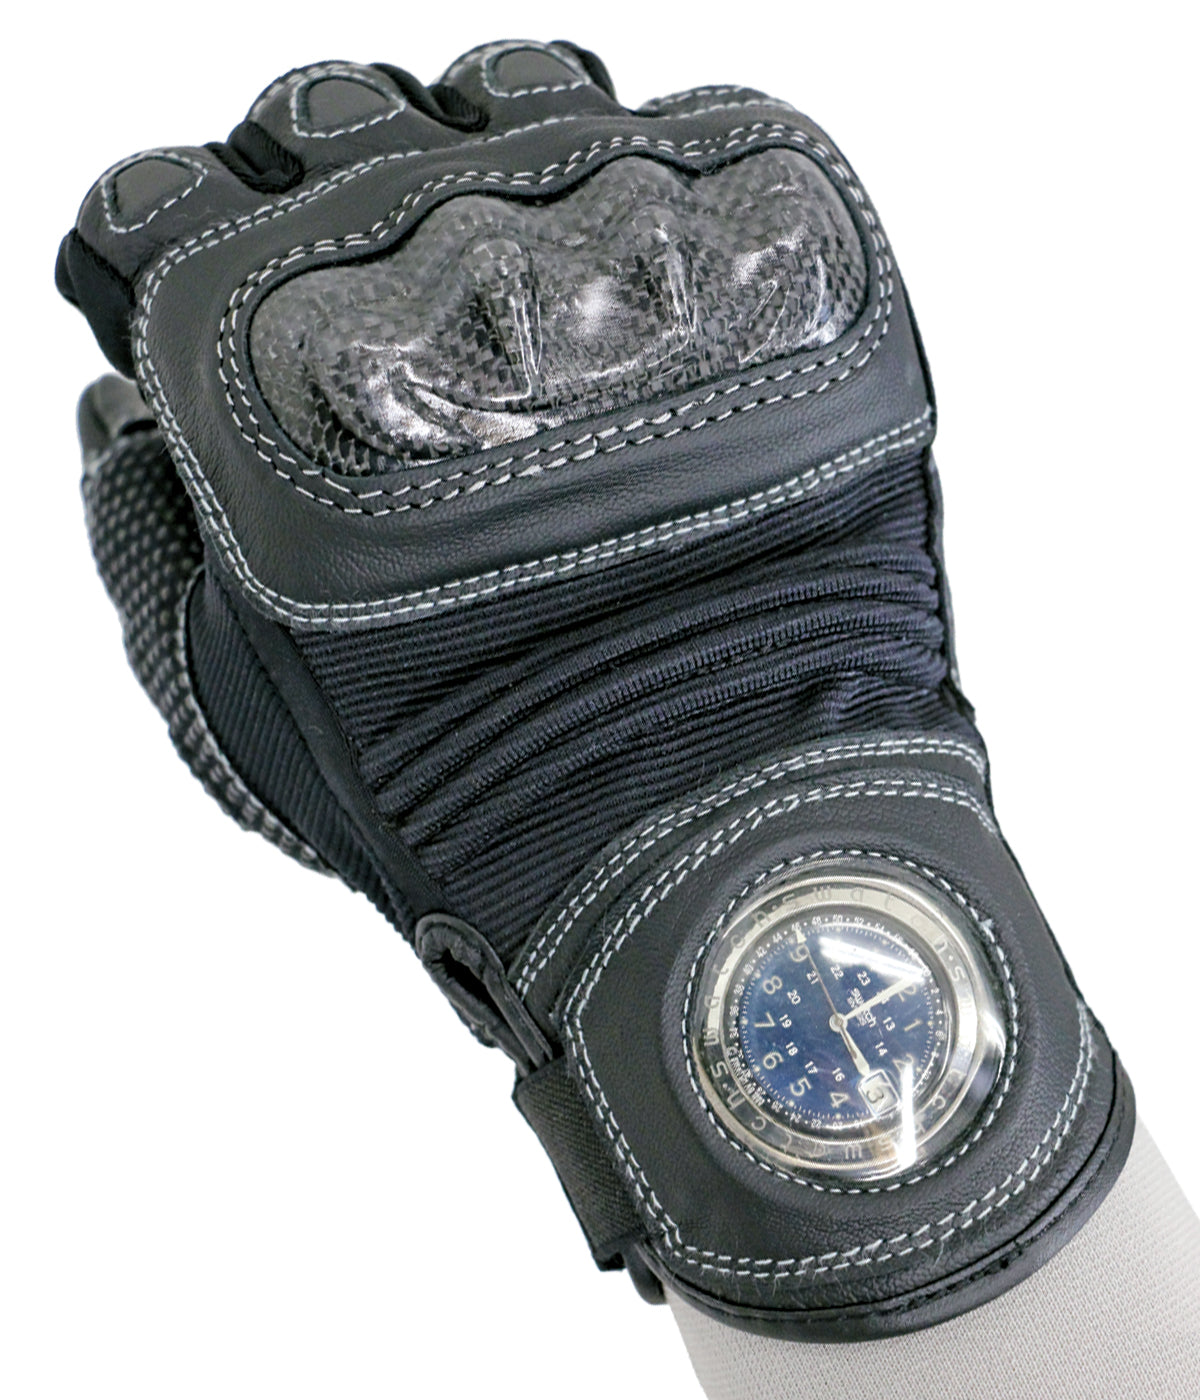 S5 Gloves (Watch window feature)